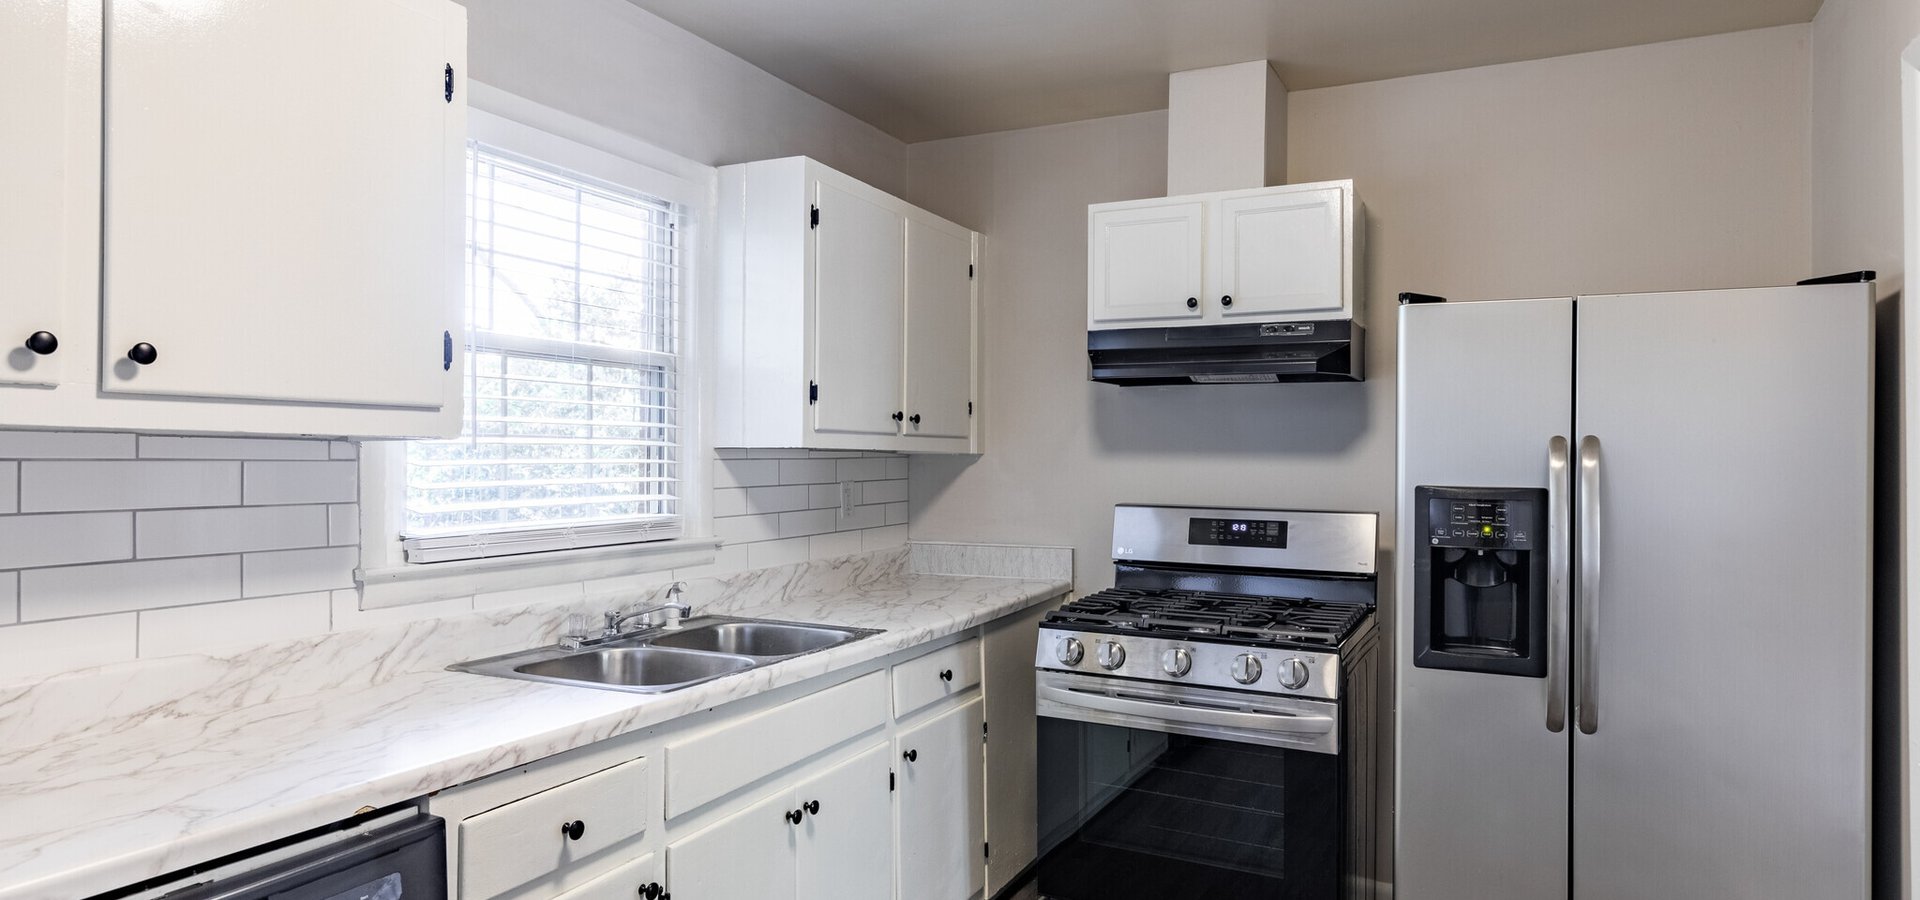 updated kitchen at Drew Valley apartments in Brookhaven, GA  30319